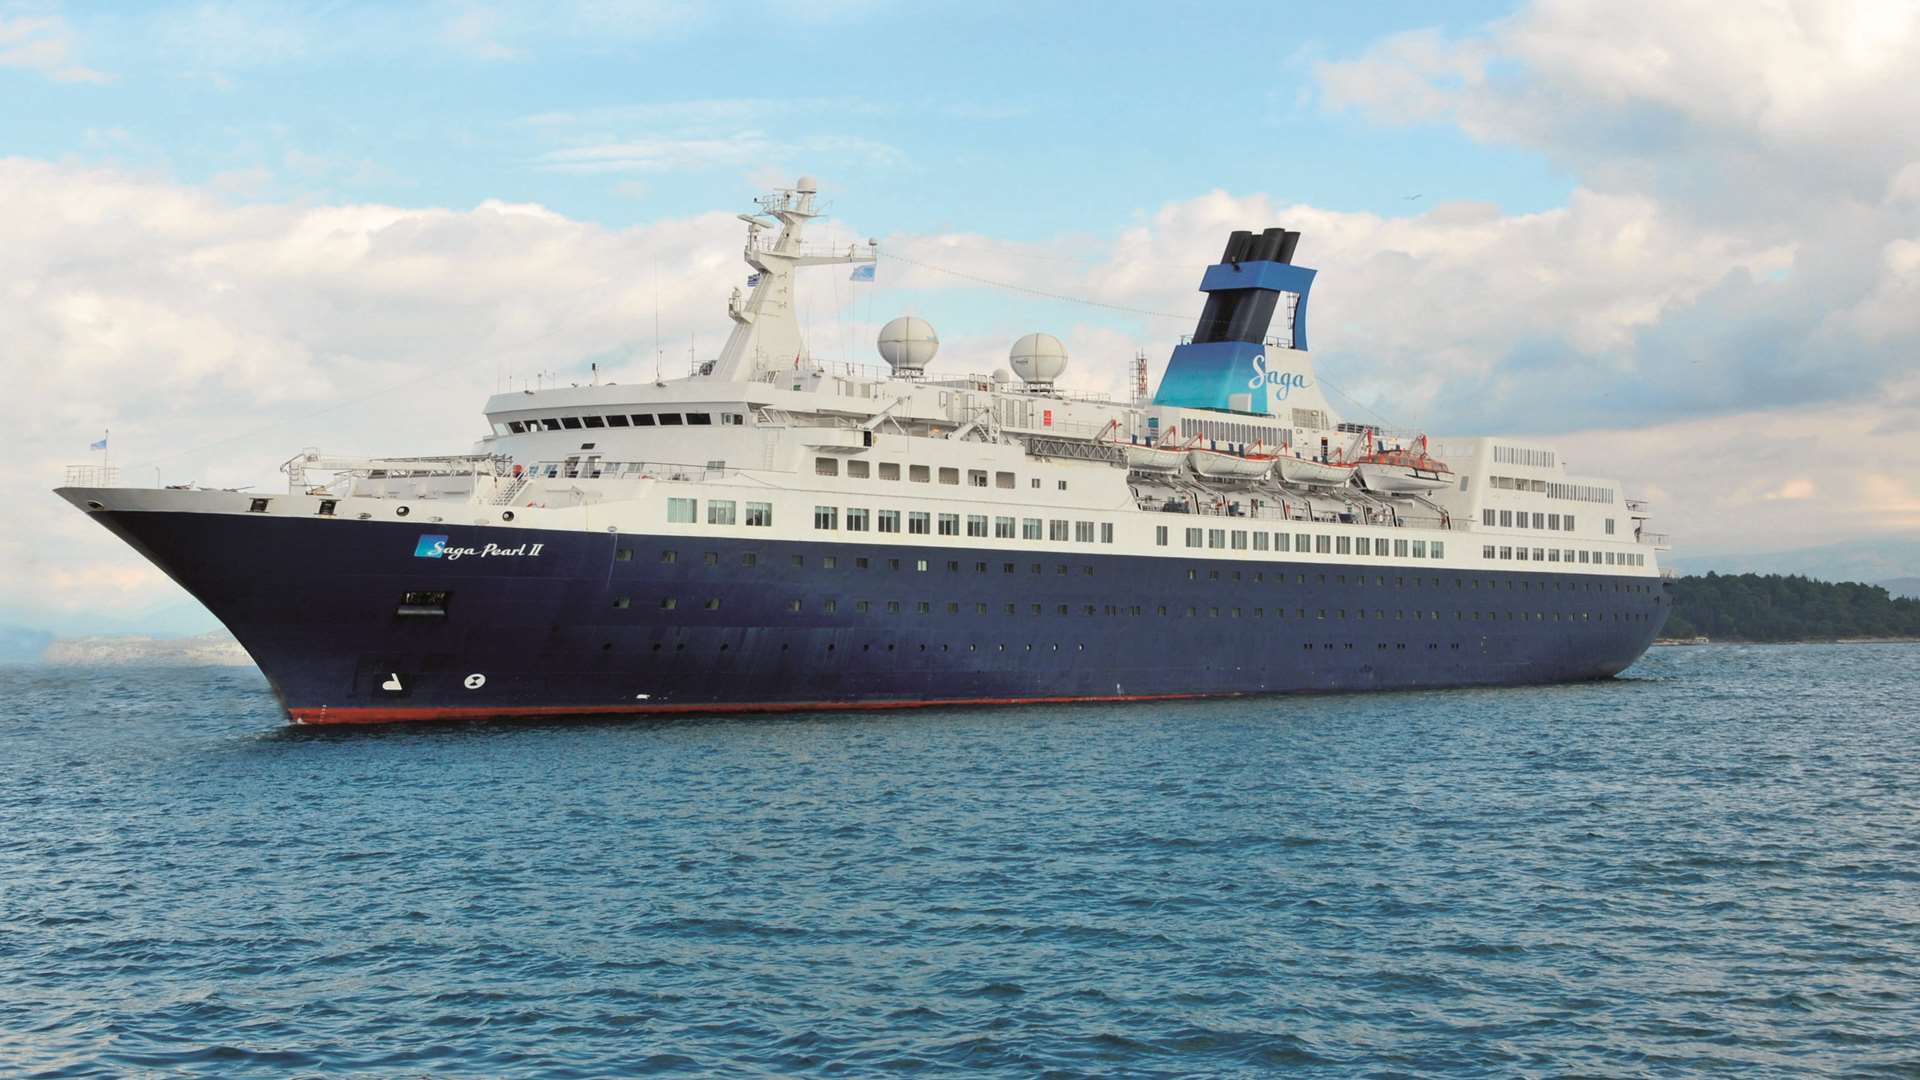 The Saga Pearl II. Picture: Saga Cruises